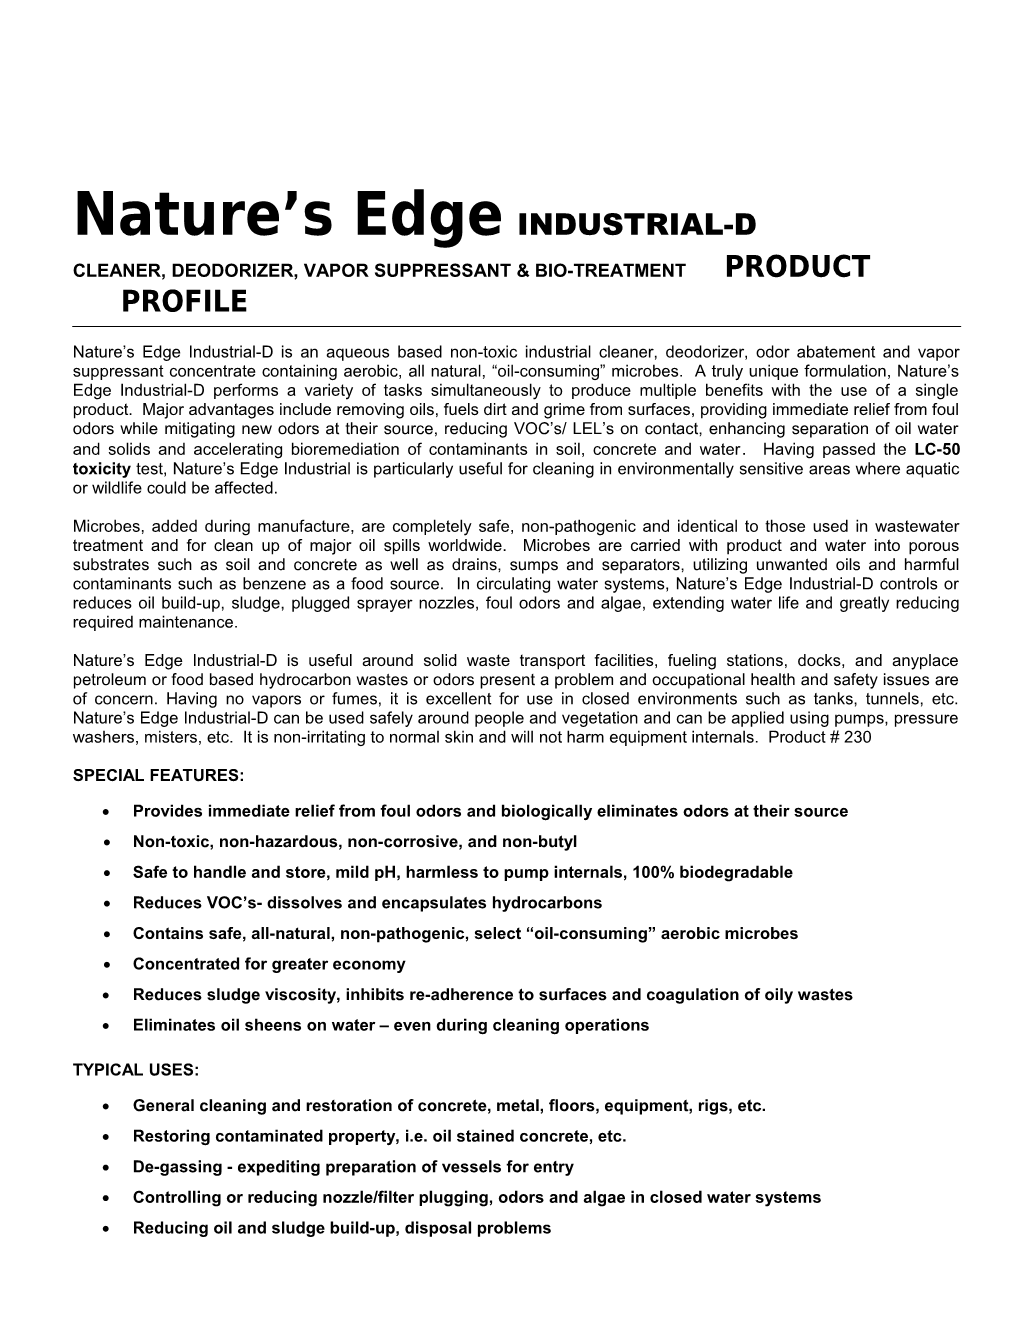 Cleaner, Deodorizer, Vapor Suppressant & Bio-Treatment Product Profile